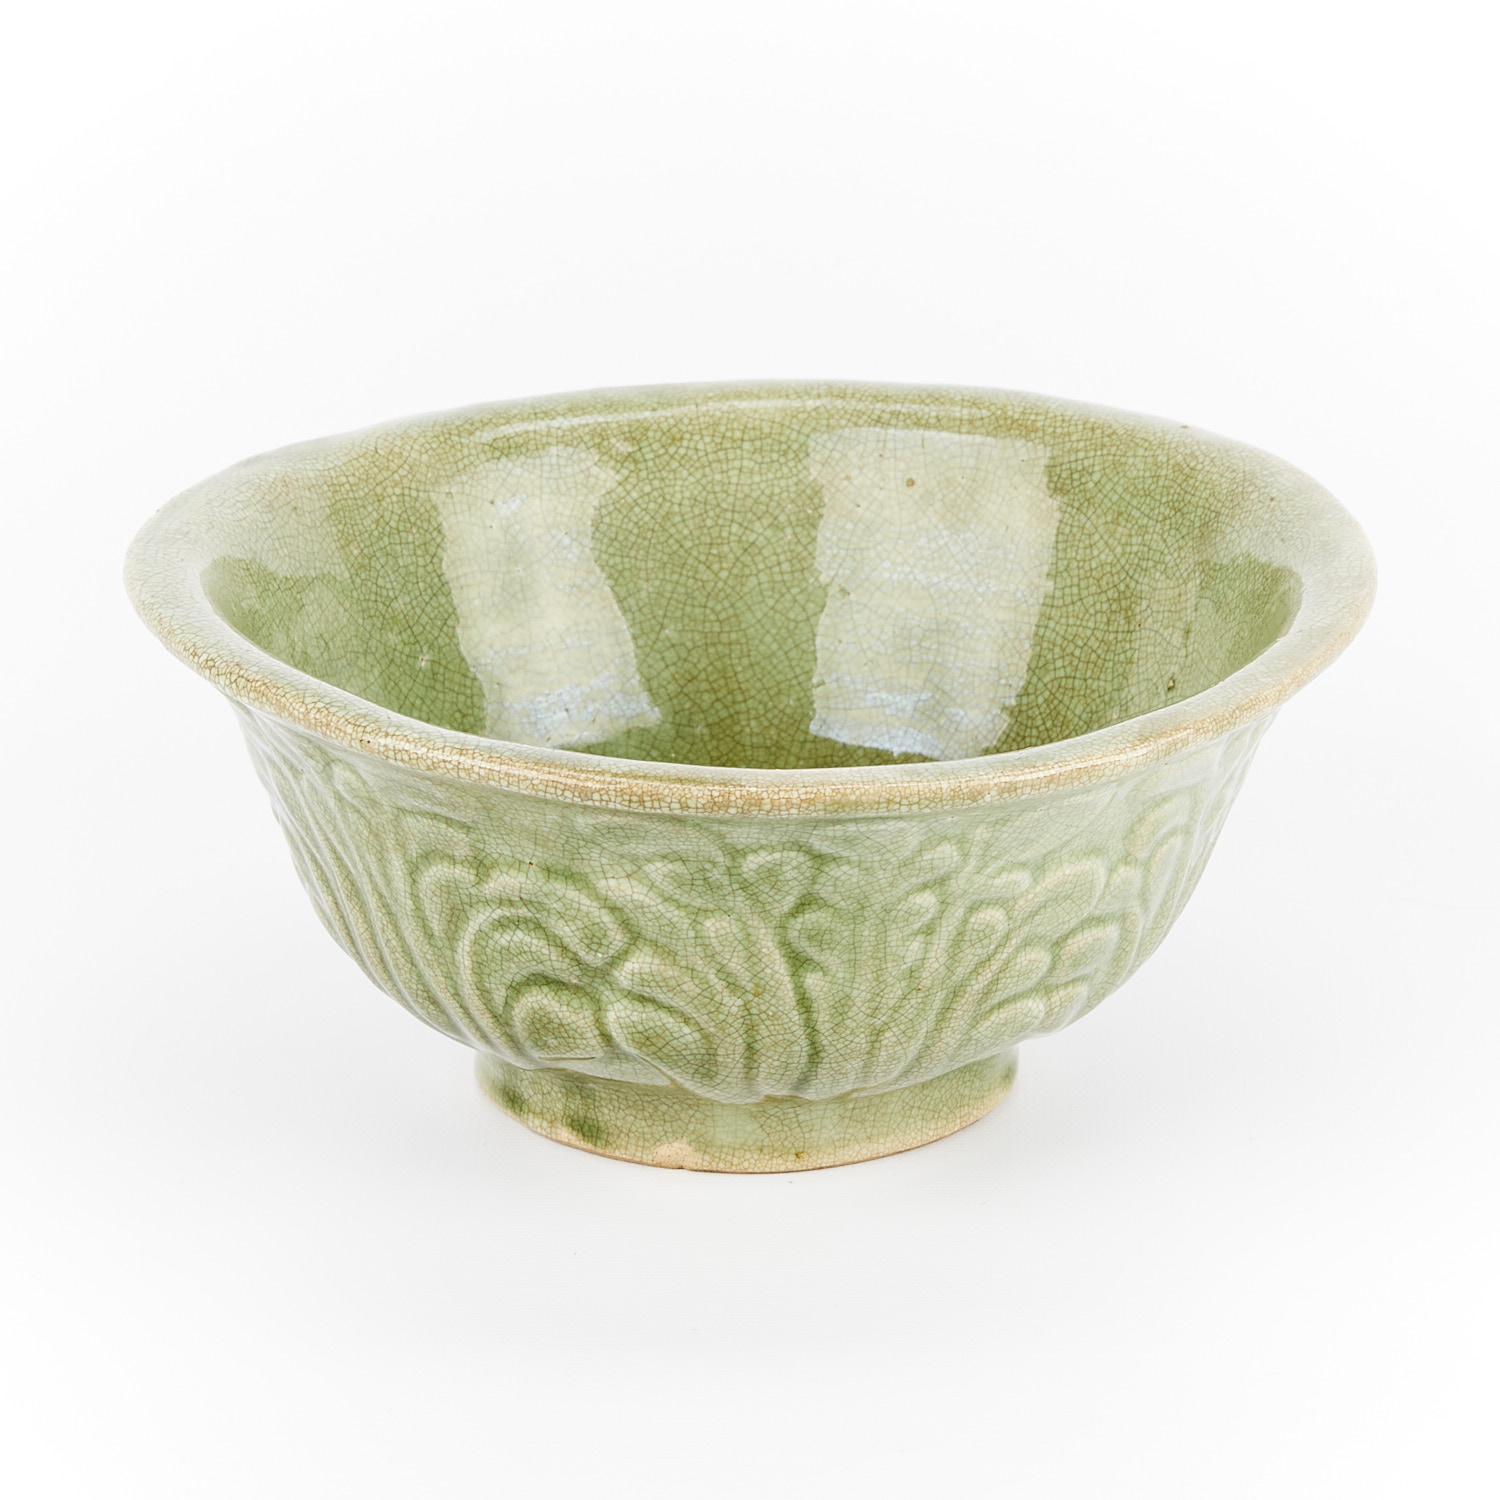 Chinese Late Qing Celadon Glaze Ceramic Bowl - Image 5 of 9